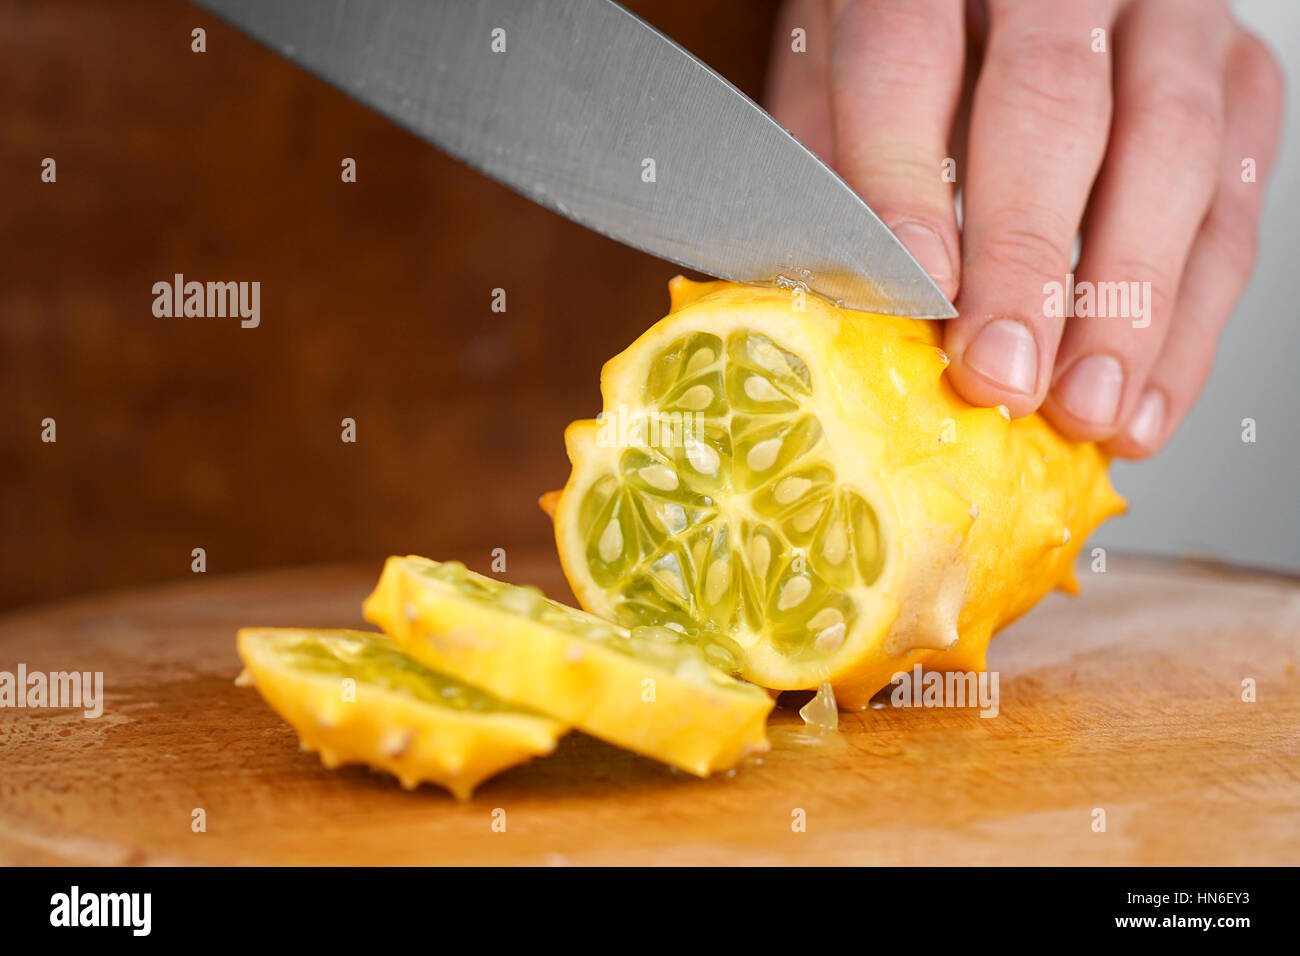 https://c8.alamy.com/comp/HN6EY3/close-up-of-chefs-hands-cutting-kiwano-melon-on-a-wooden-cutting-board-HN6EY3.jpg